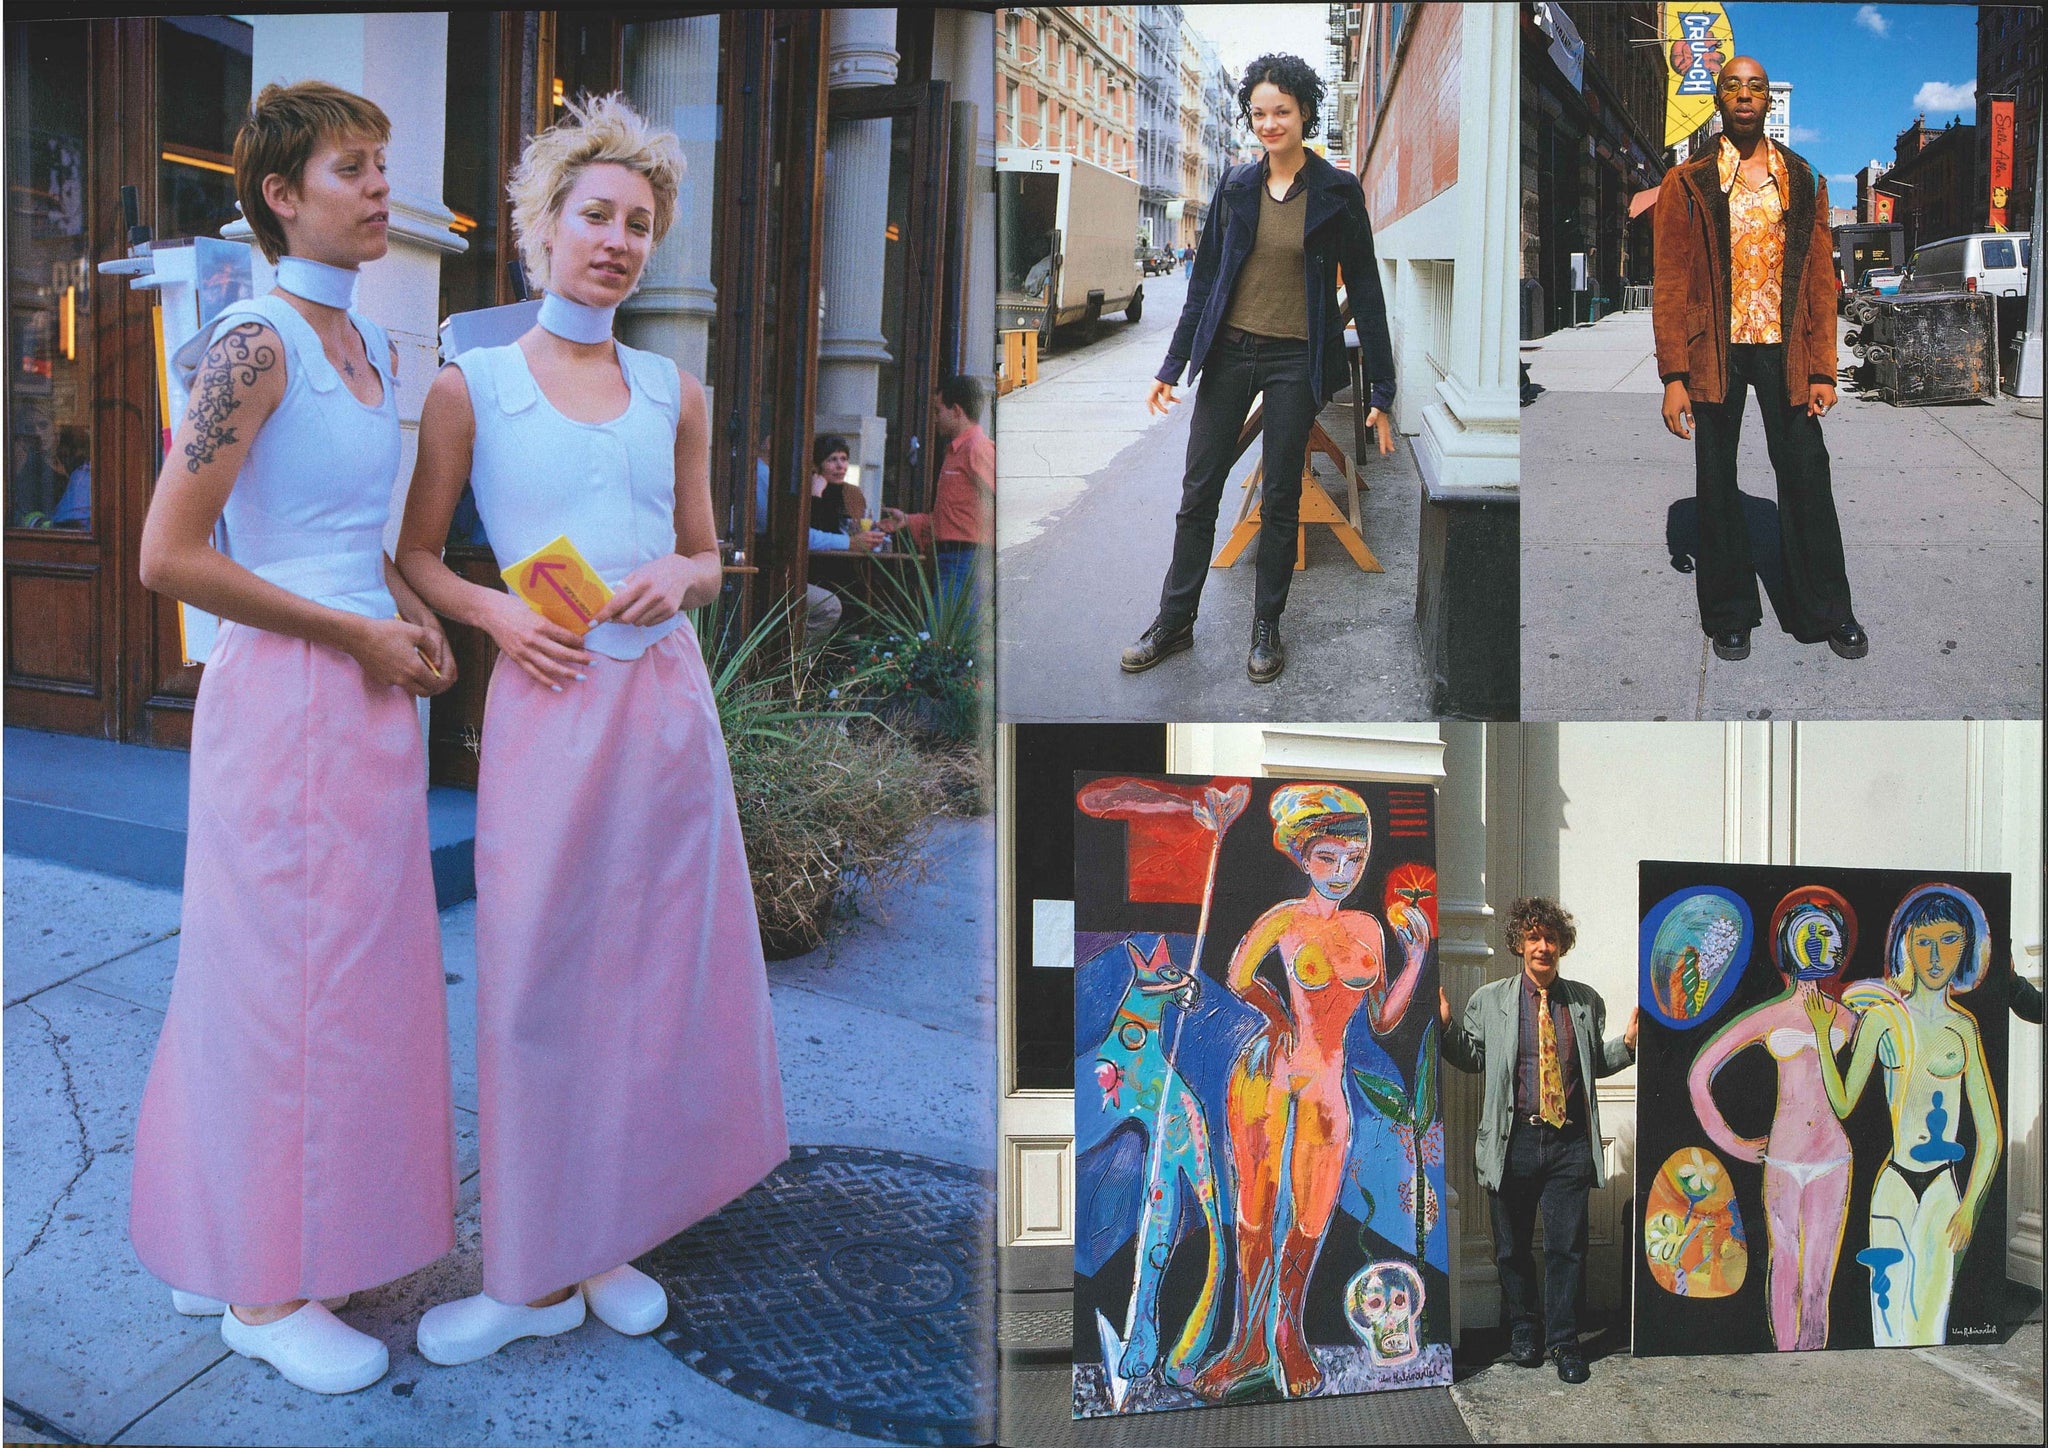 STREET magazine no. 101 / december 1997 / fashion in new york / Shoichi Aoki